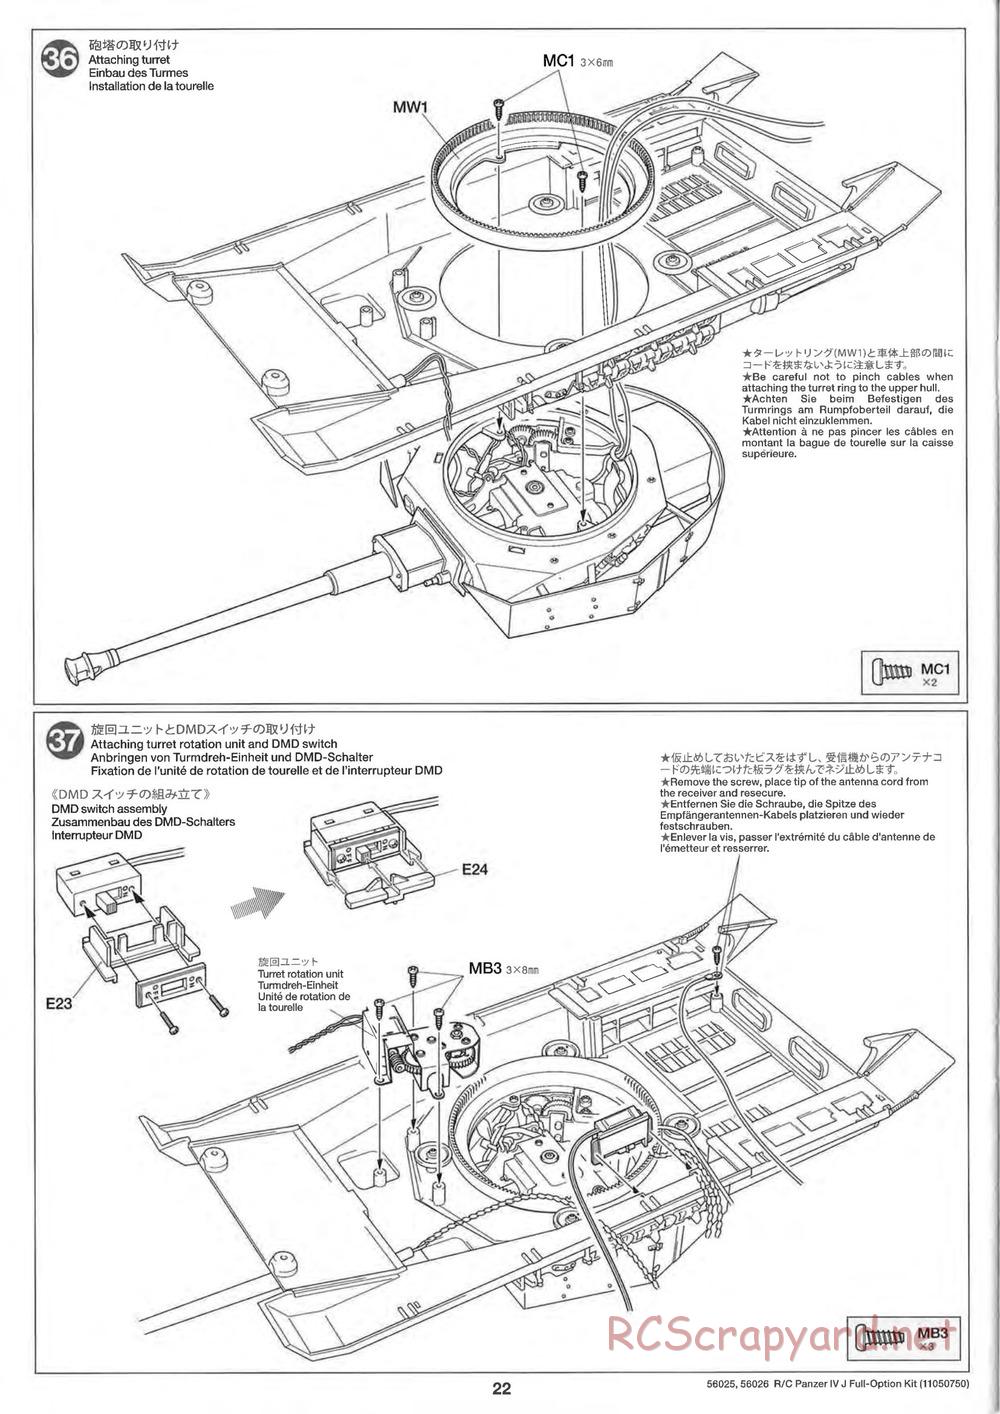 Tamiya - Panzerkampfwagen IV Ausf.J - 1/16 Scale Chassis - Manual - Page 22